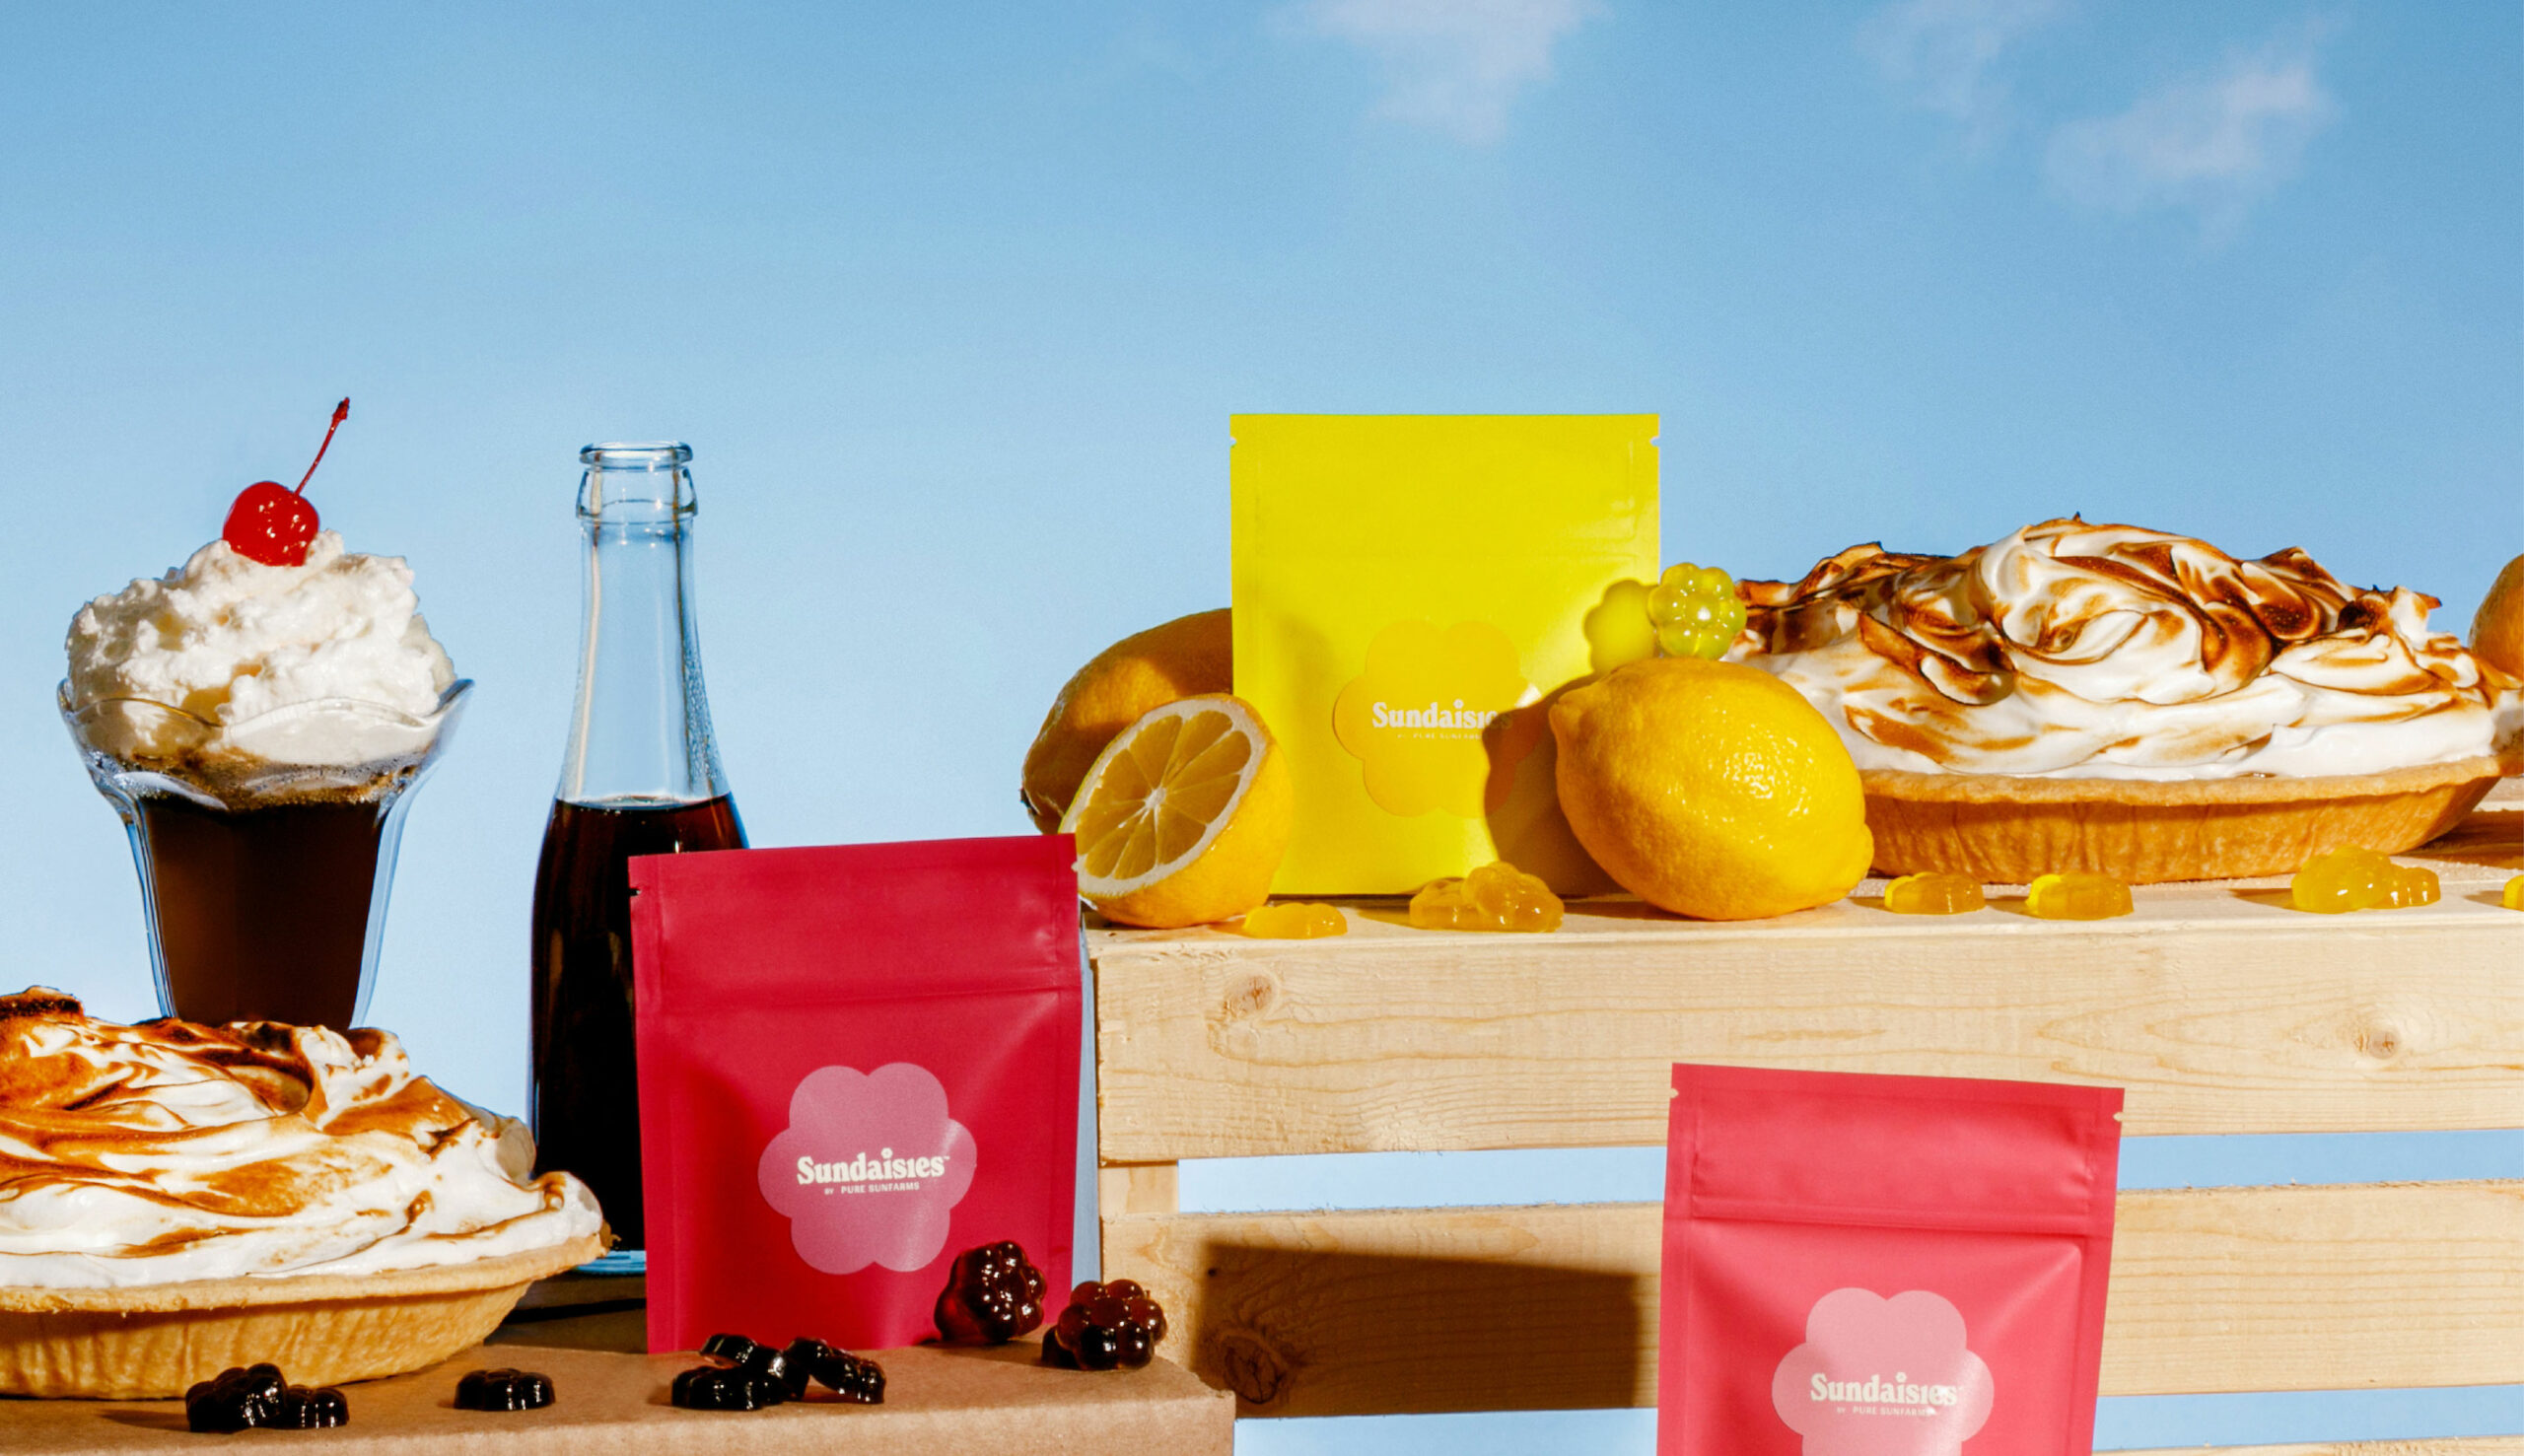 Sundaisies picnic setting with concept packaging, cherry cola float, lemon meringue pie, and lemons.